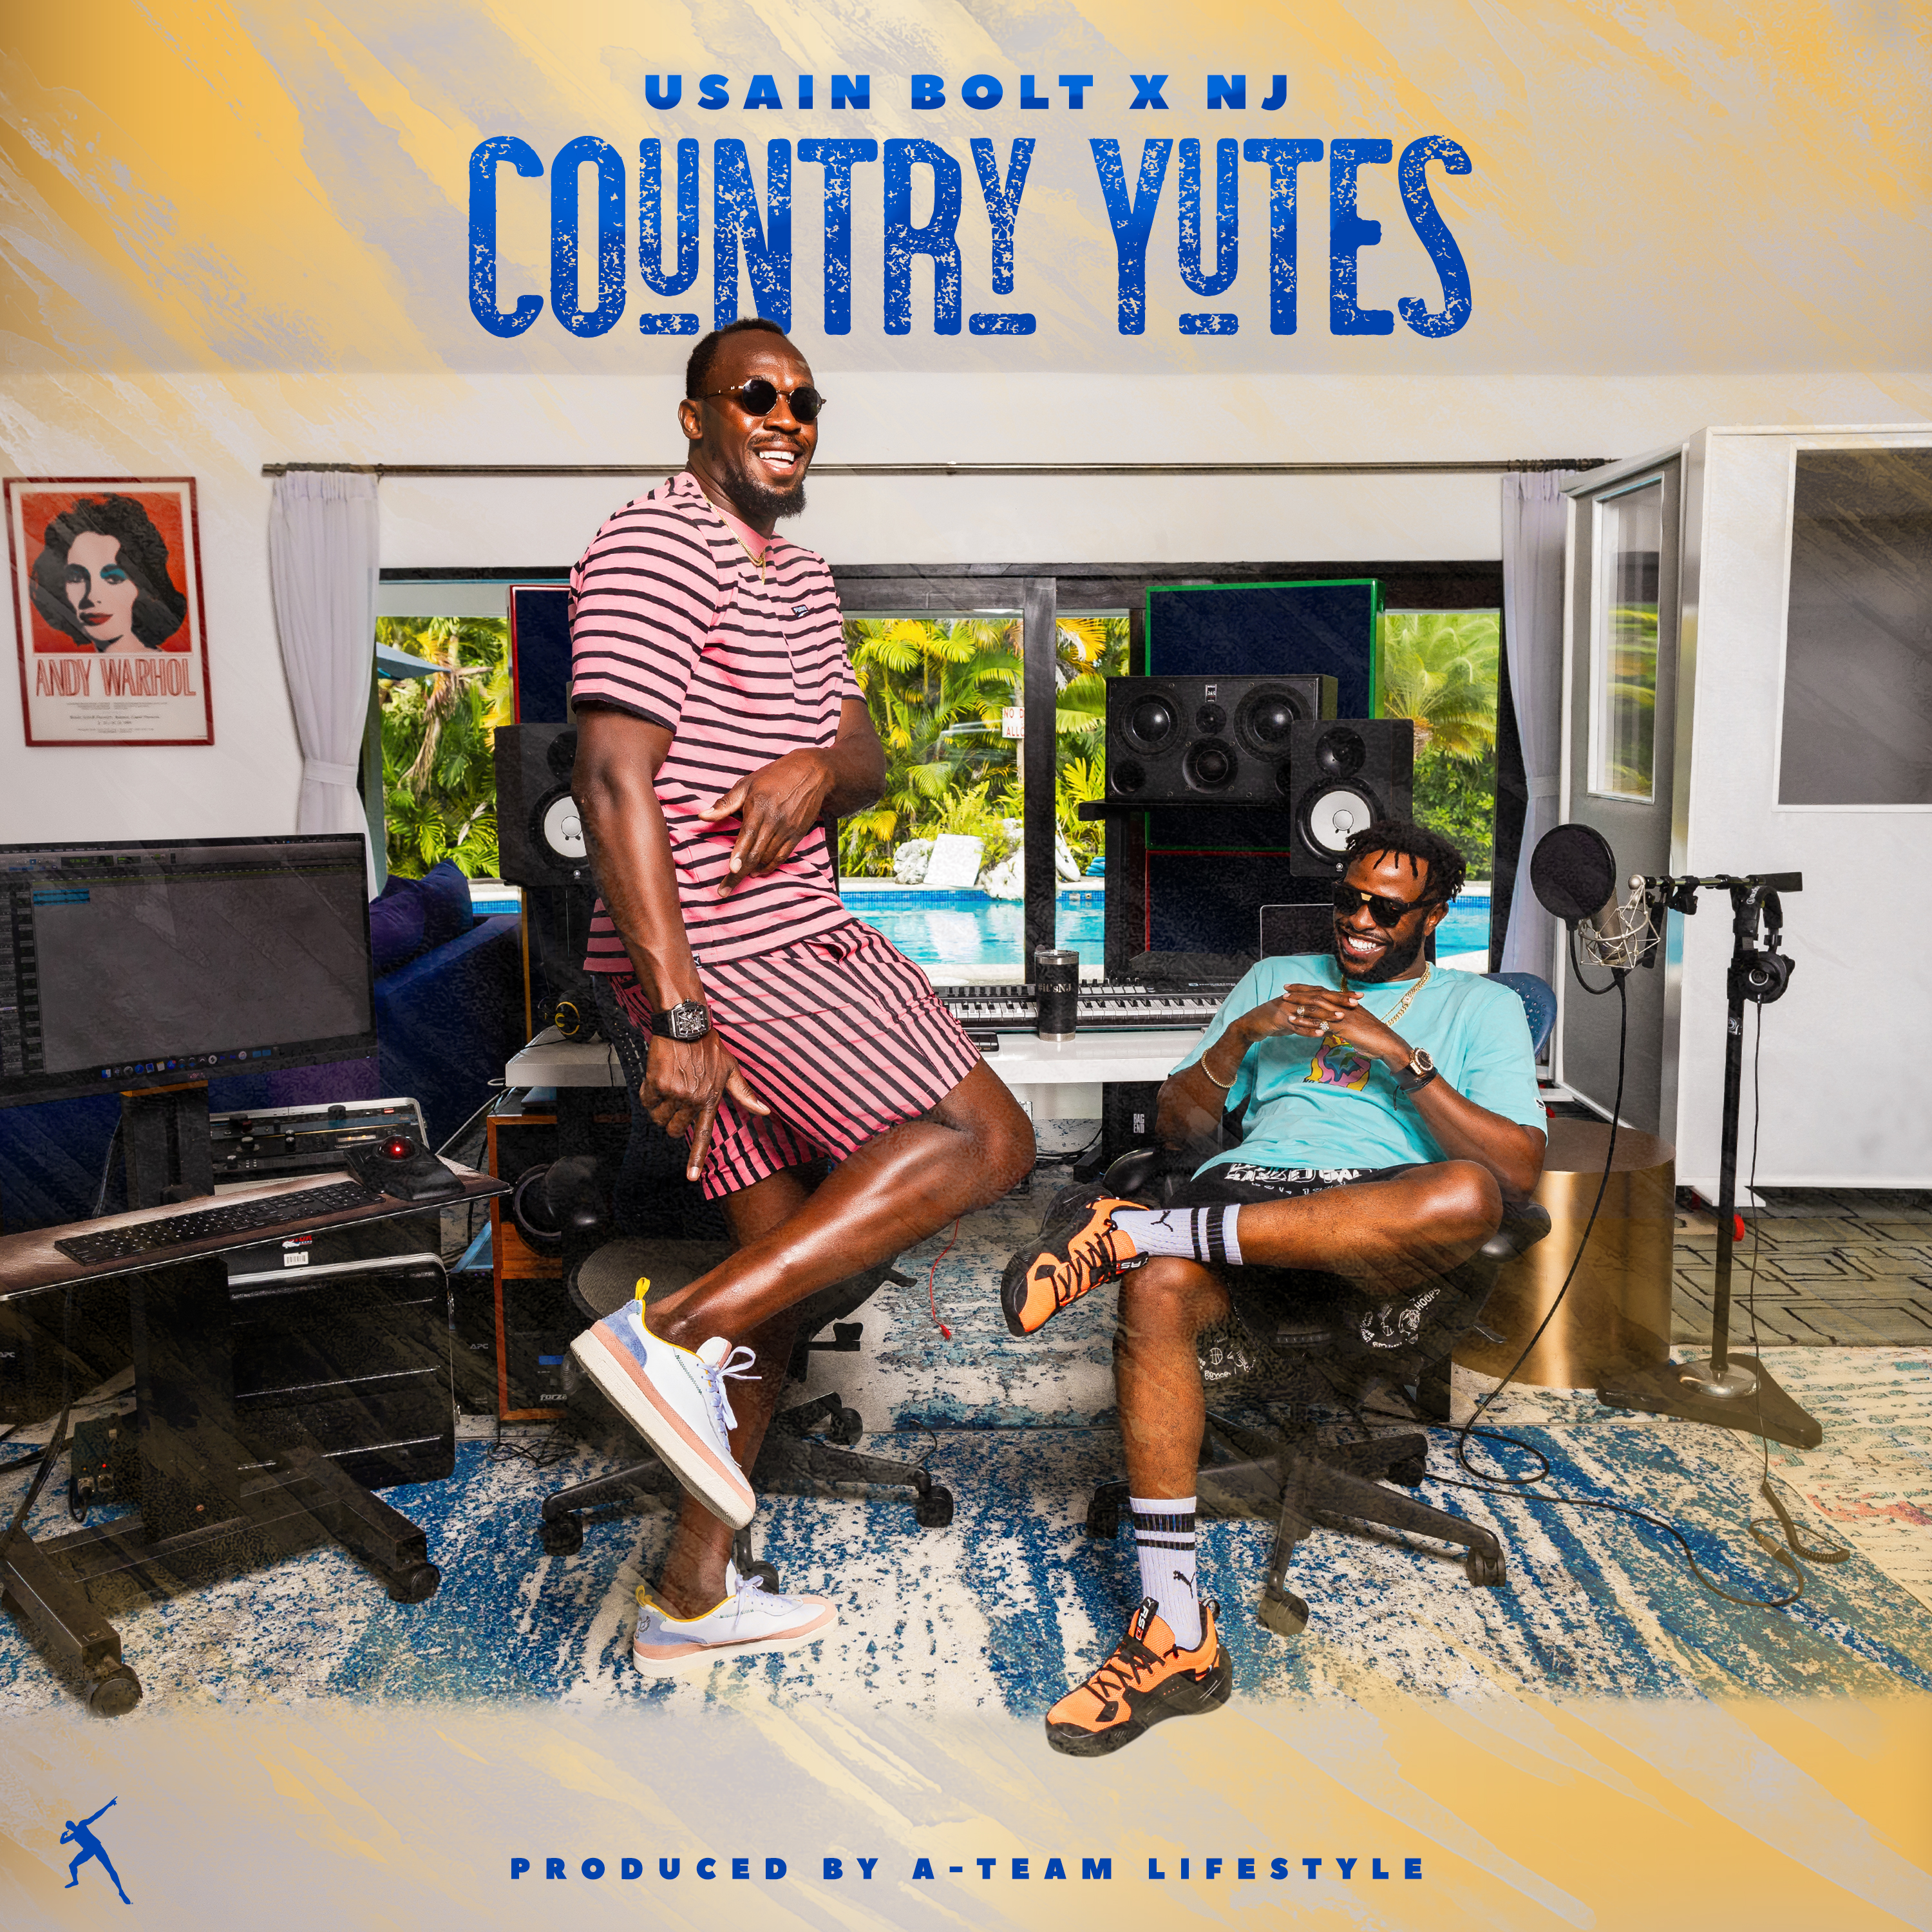 Usain Bolt x NJ ‘Country Yutes’ album coming soon